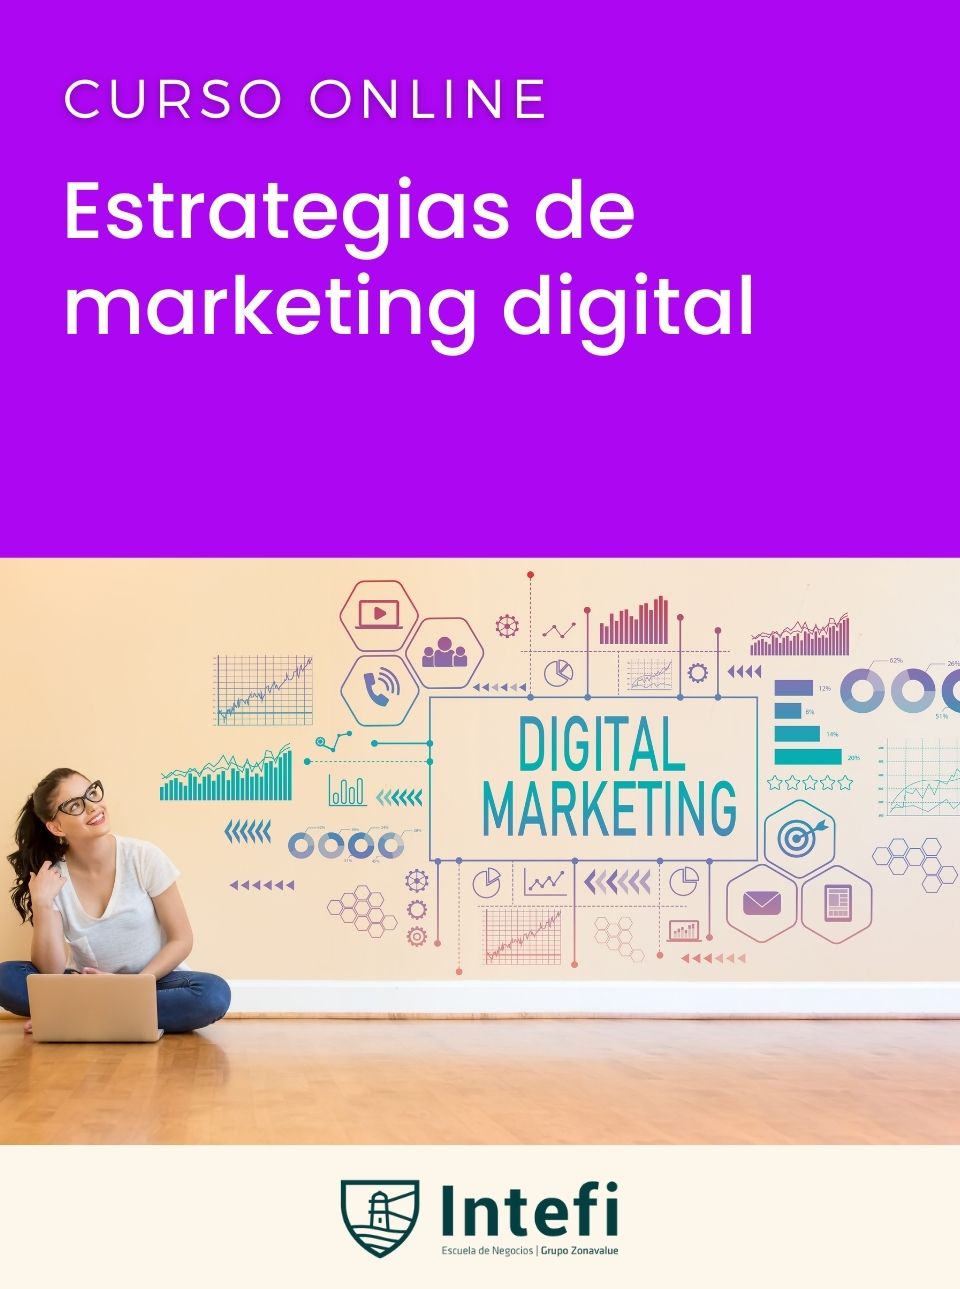 Curso de estrategias de marketing digital Intefi